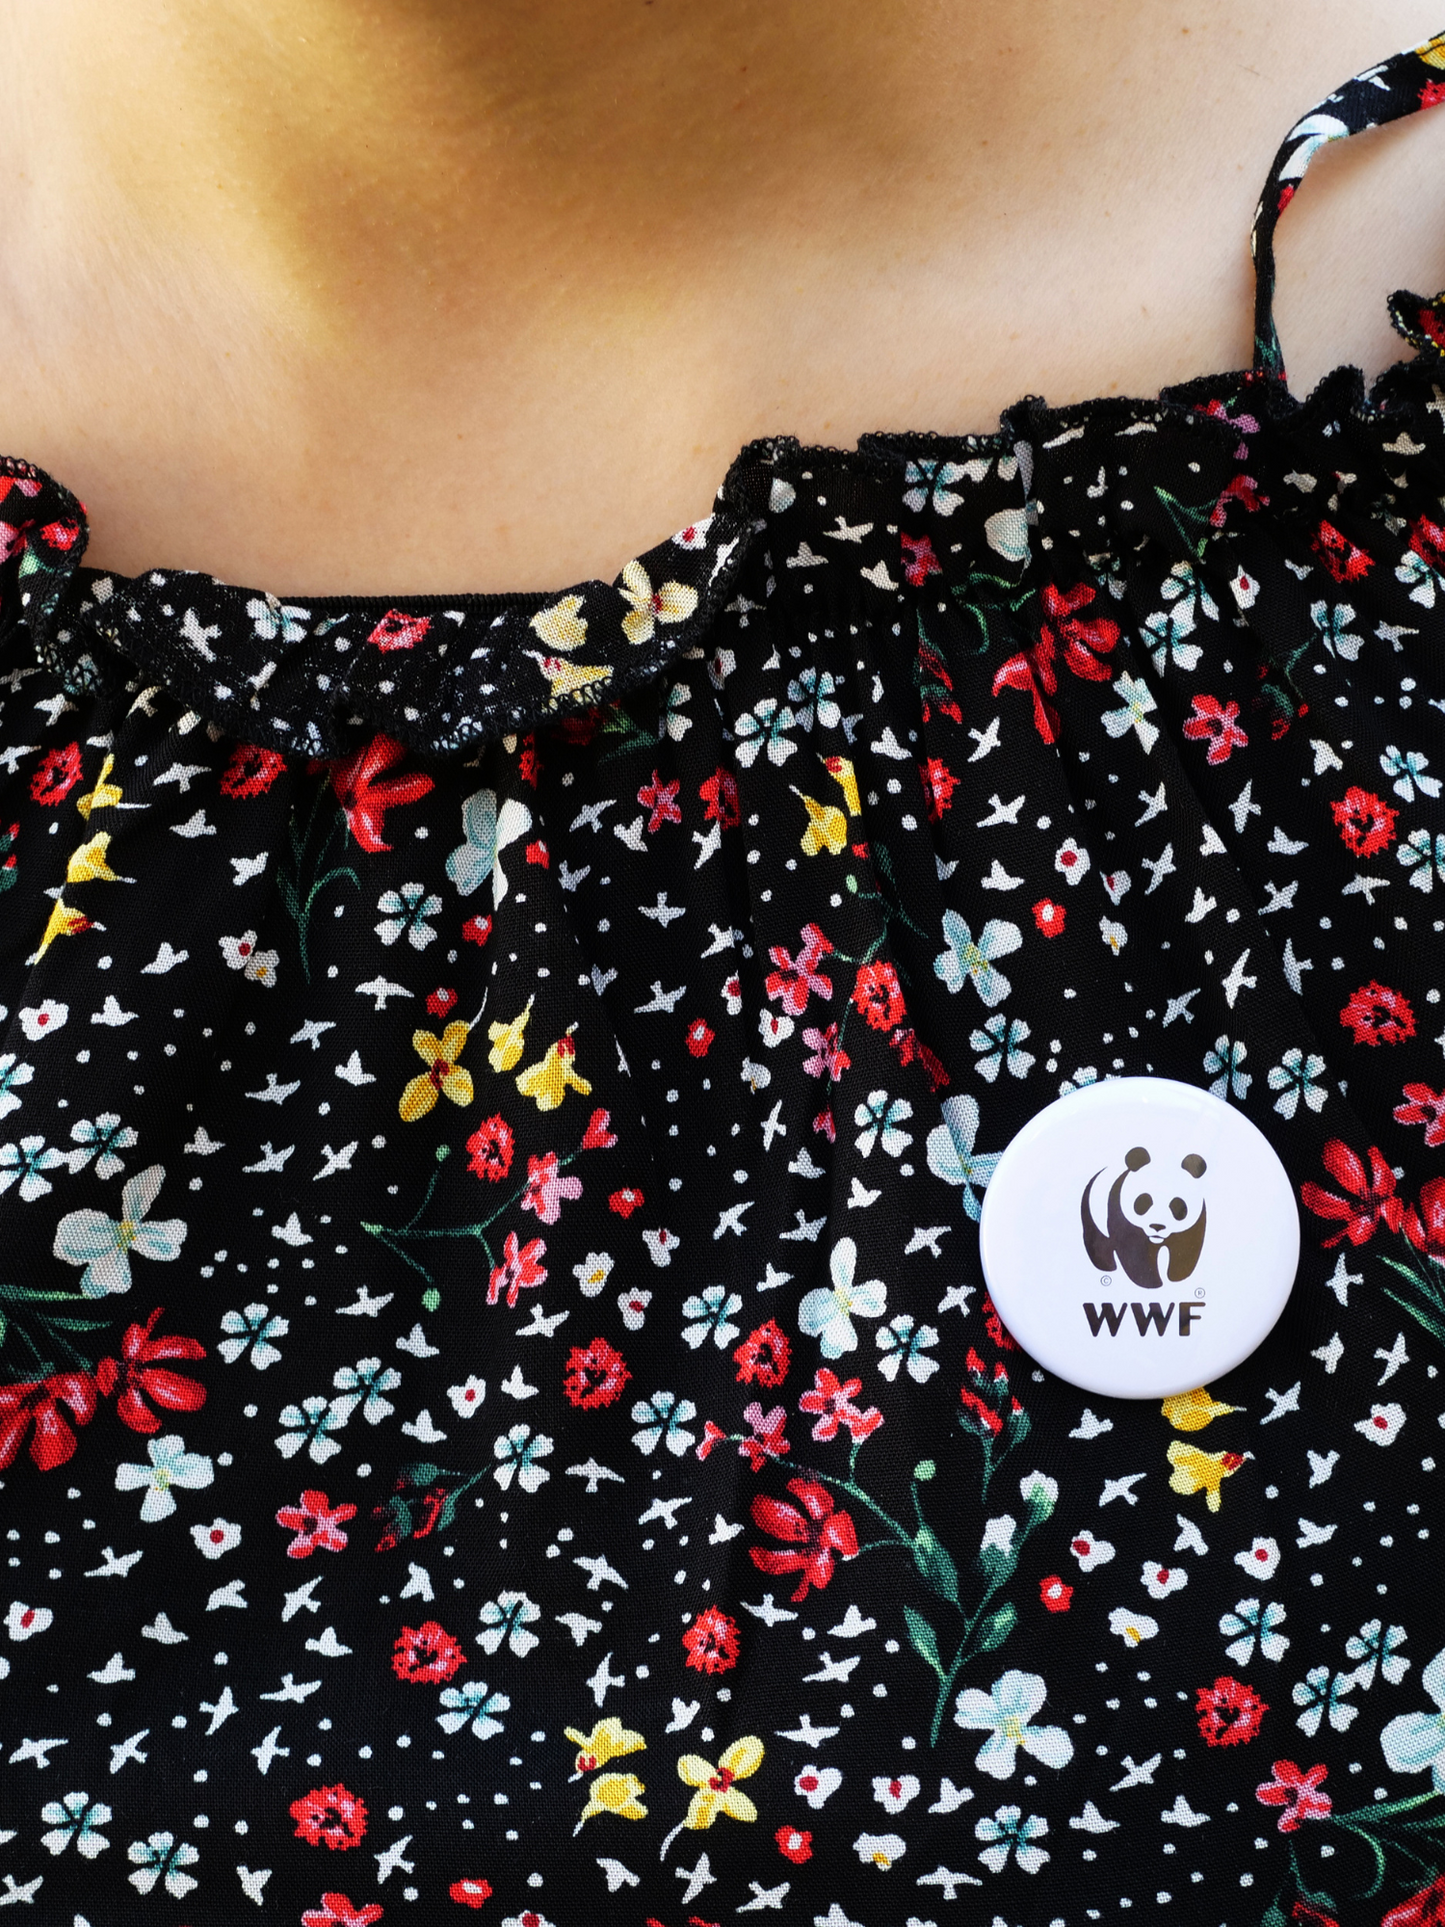 WWF-badge